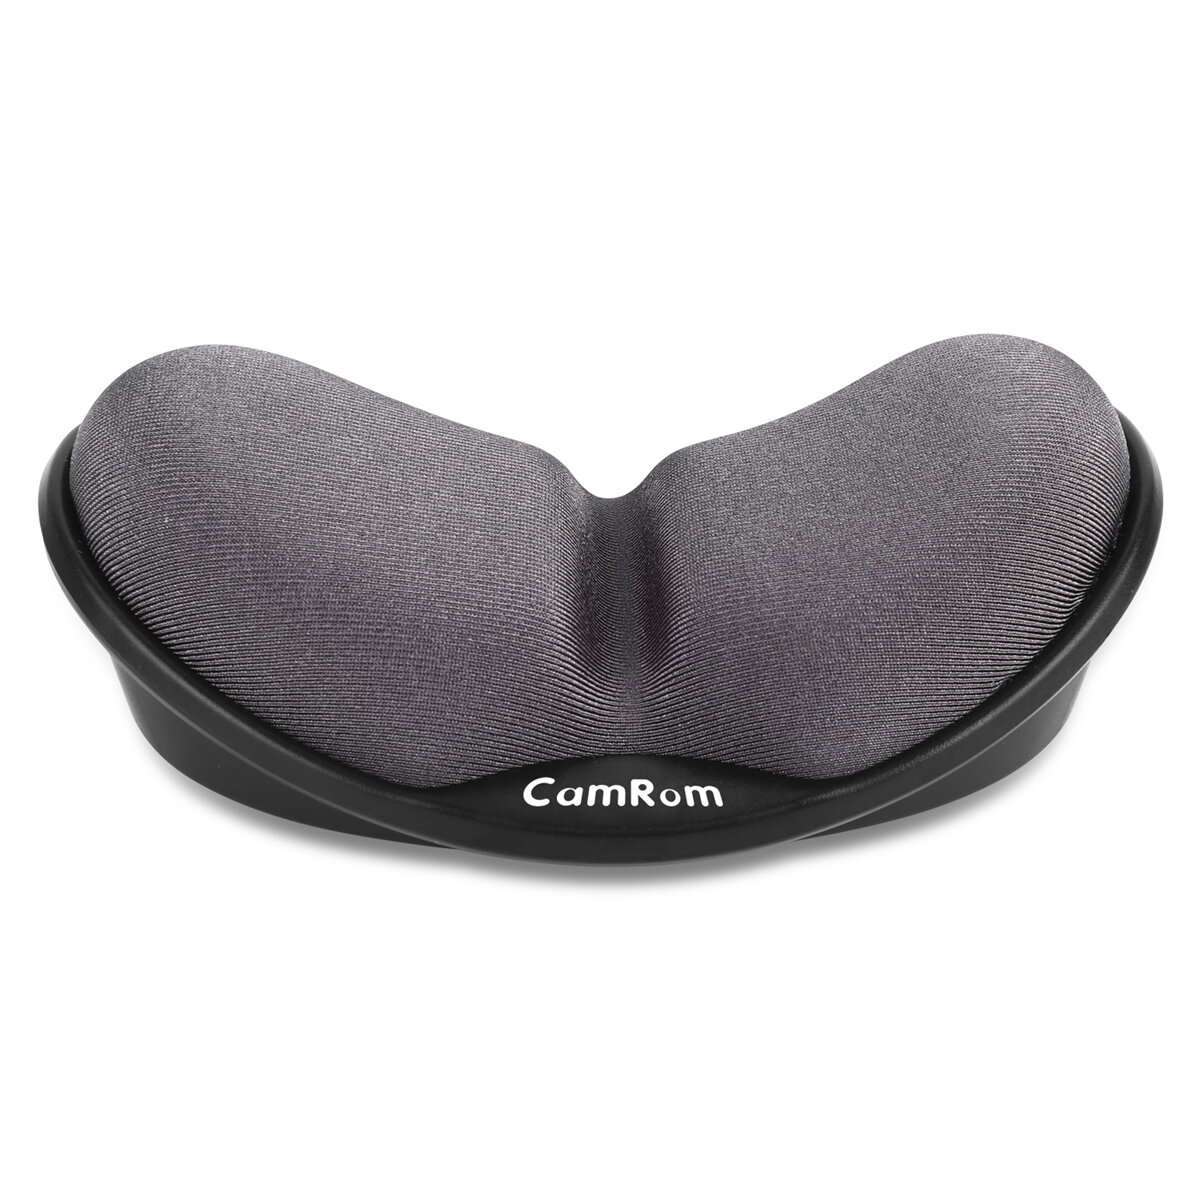 CamRom Wrist Pad Ergonomic Slow Rebound Memory Foam Anti-Skid Mousepad Support Wrist Rest Mat for Of